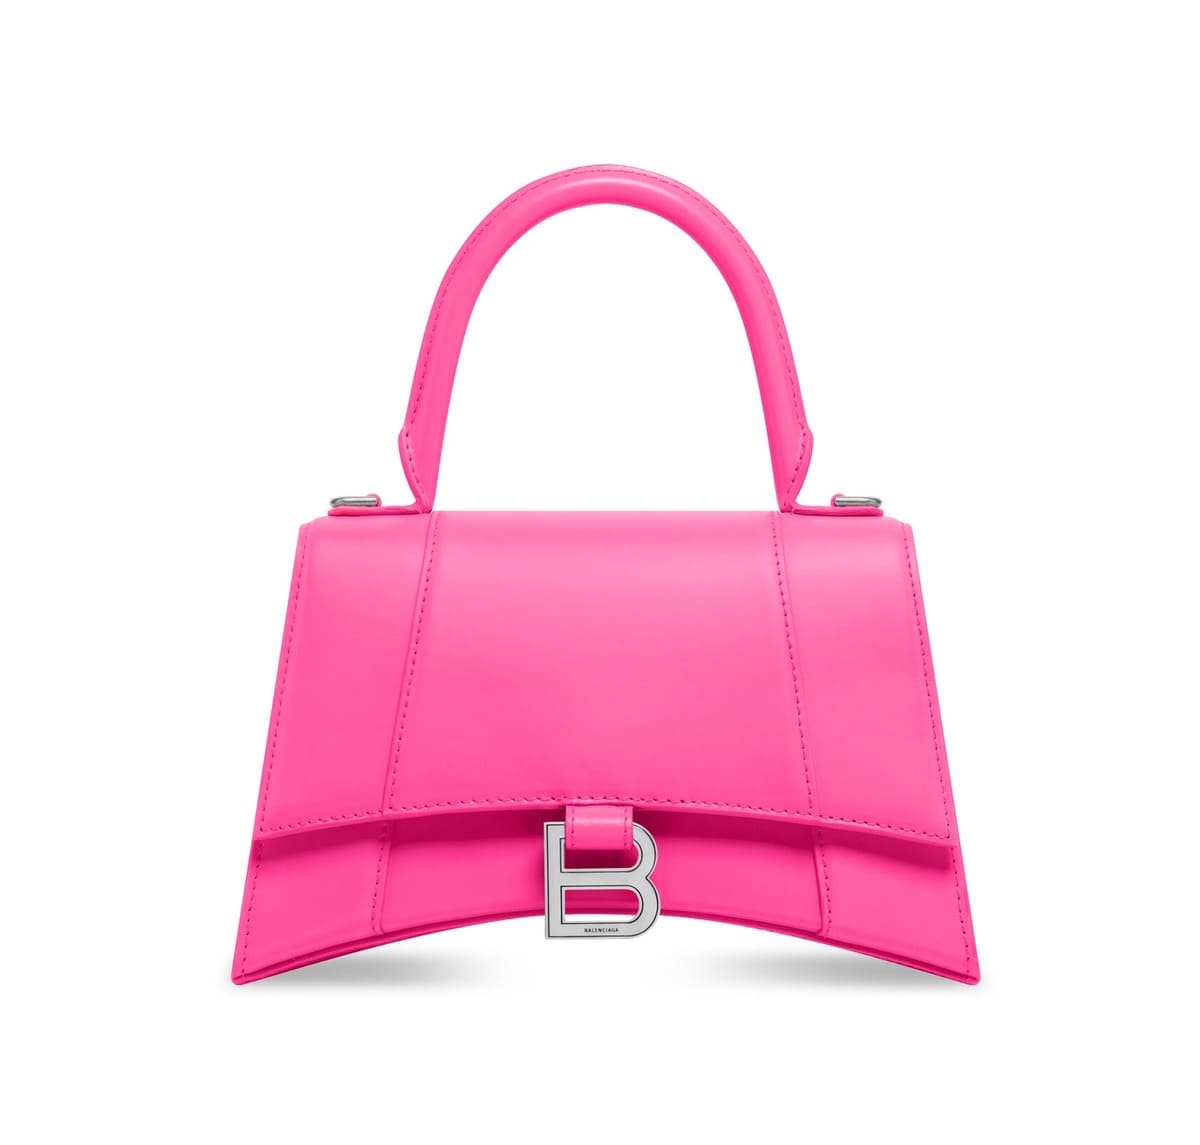 Balenciaga Hourglass Small Bag in Box Calfkin neon pink